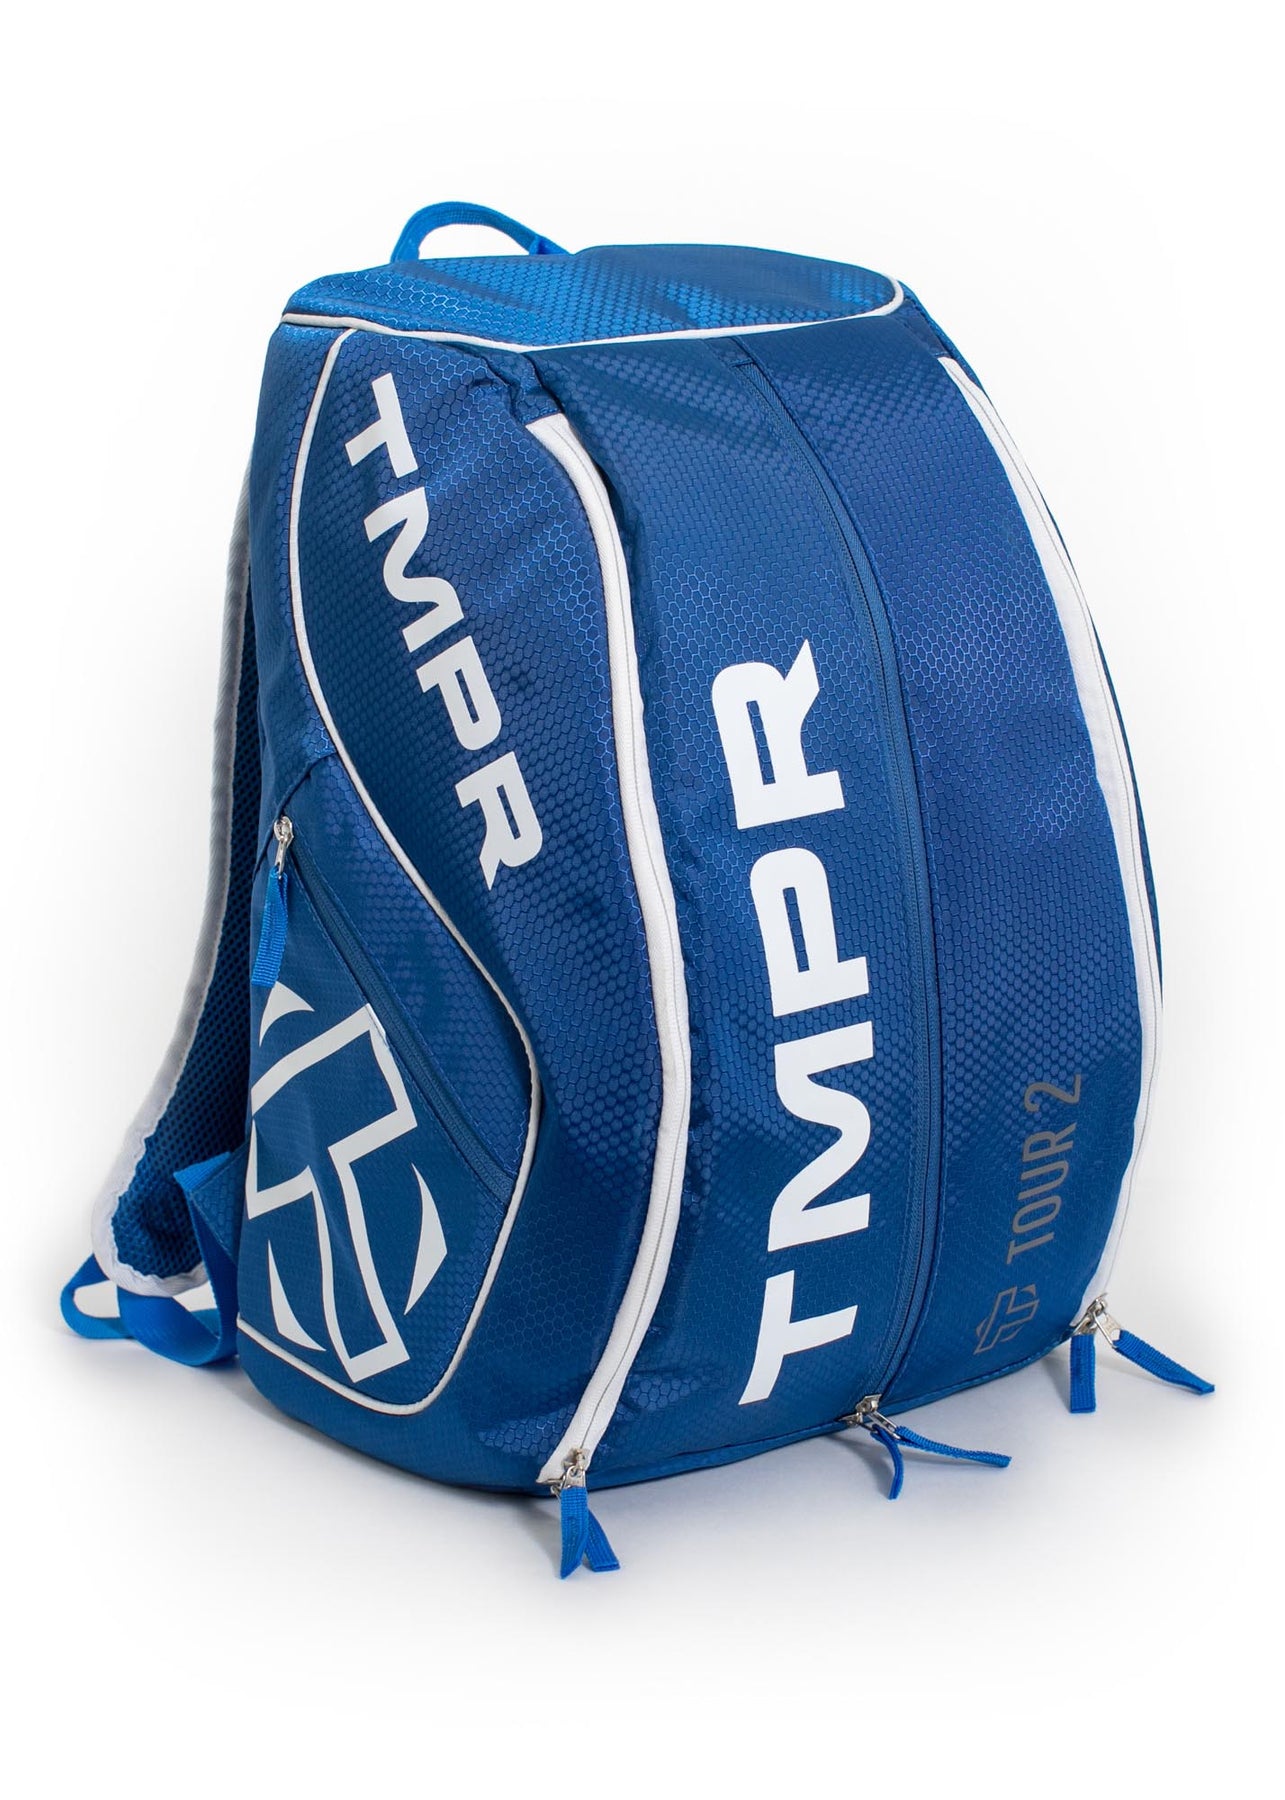 TMPR Tour 2 Backpack | TMPR Sports High Performance Pickleball Paddles